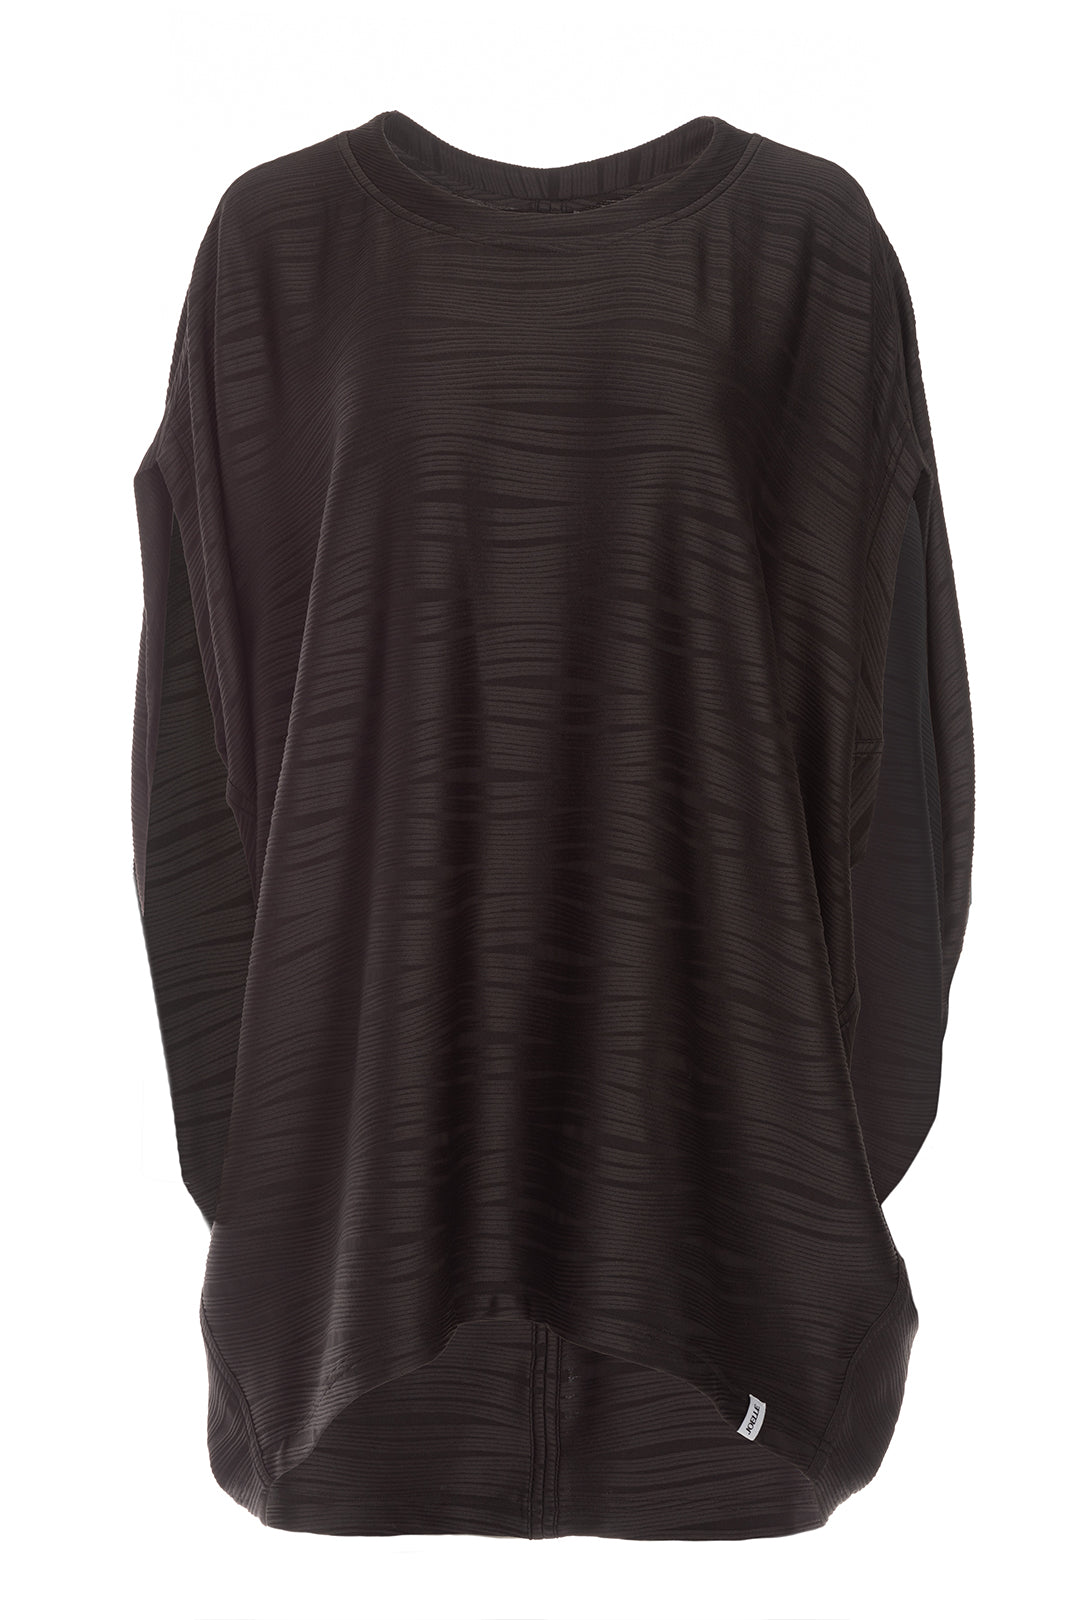 Loose textured black sweater | Valli